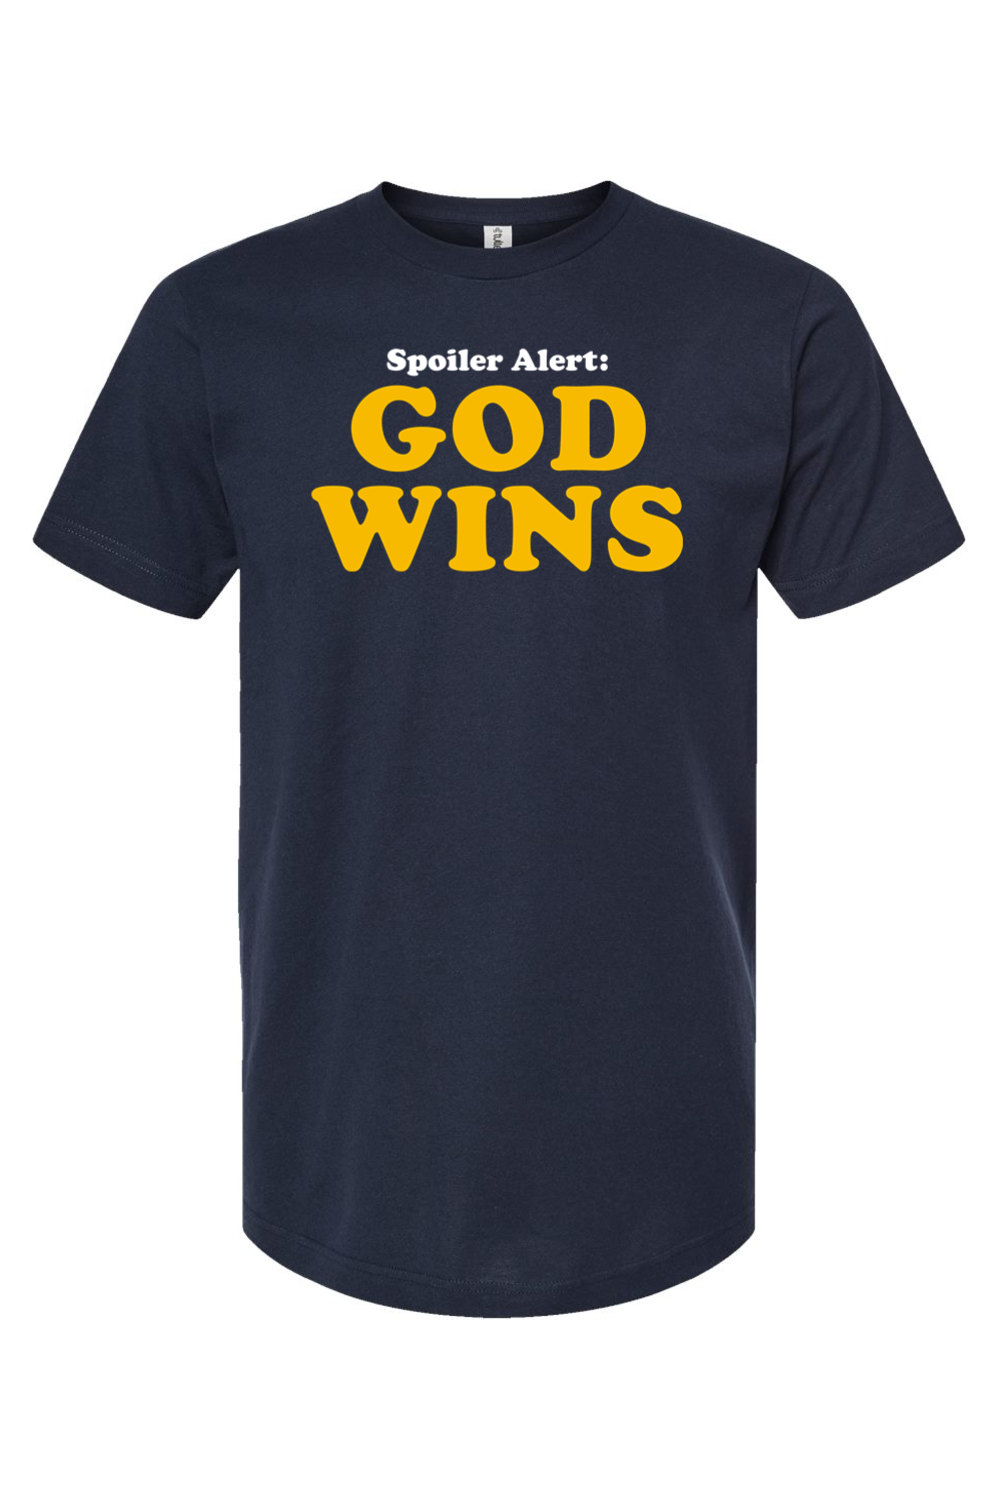 Spoiler Alert: God Wins - T-Shirt